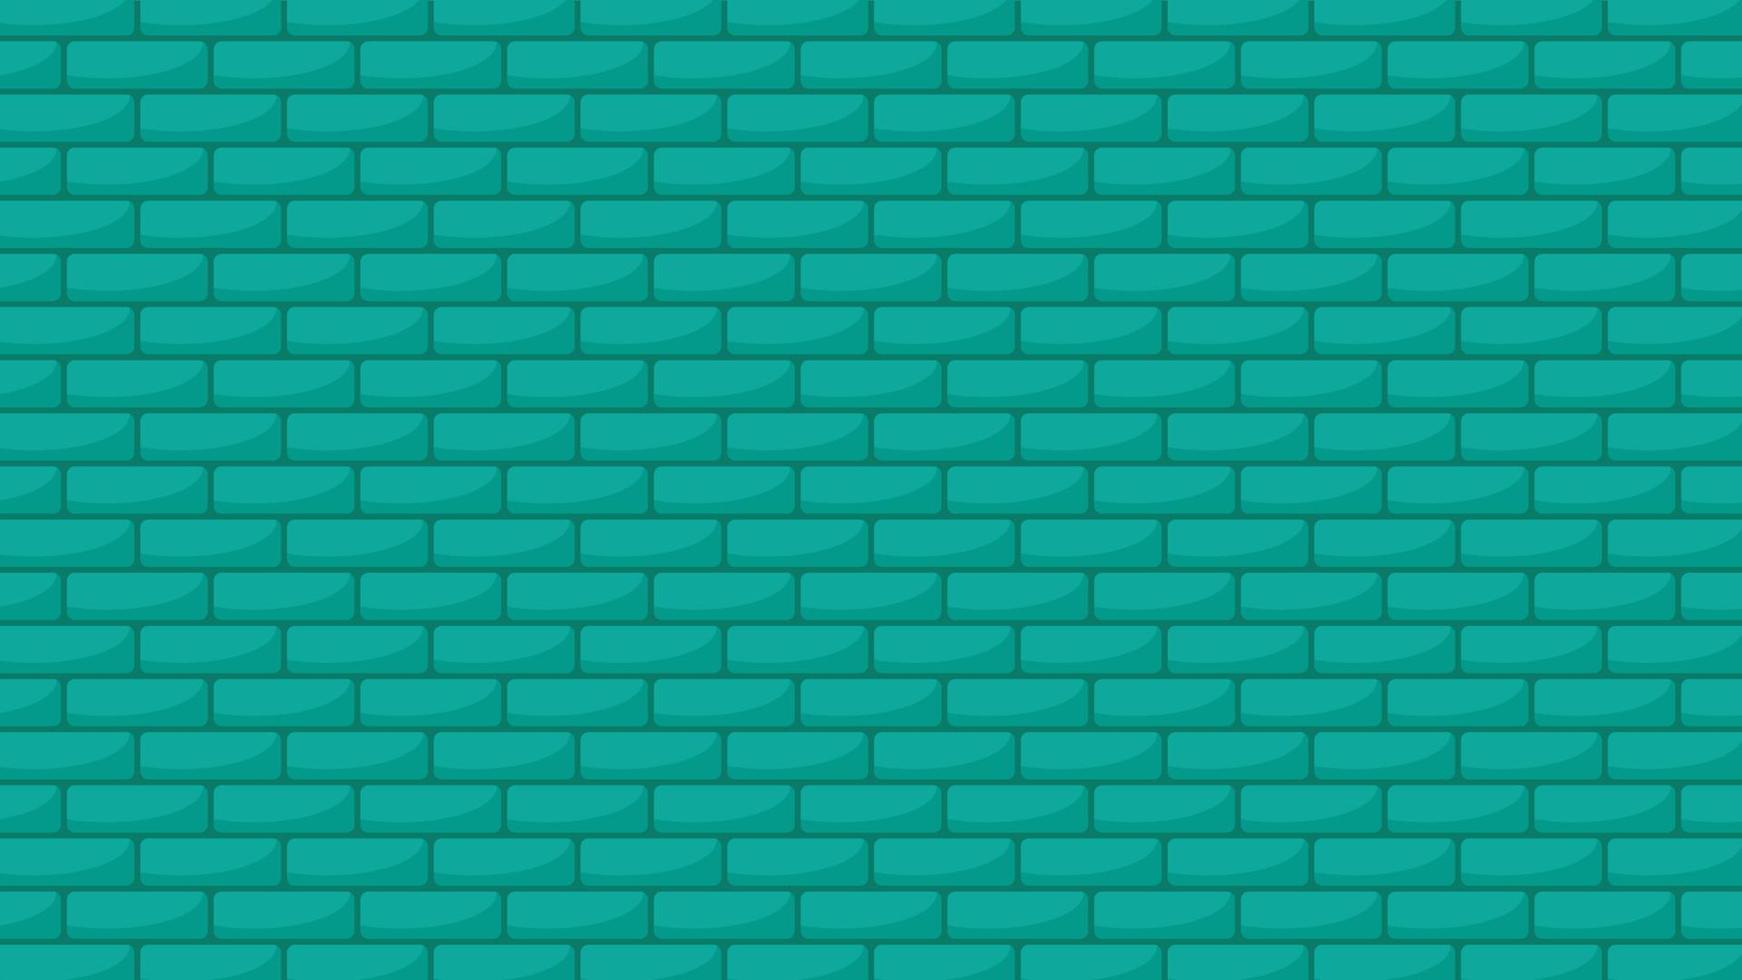 Brick pattern wallpaper. Brick wall background. Mint green brick wallpaper. vector